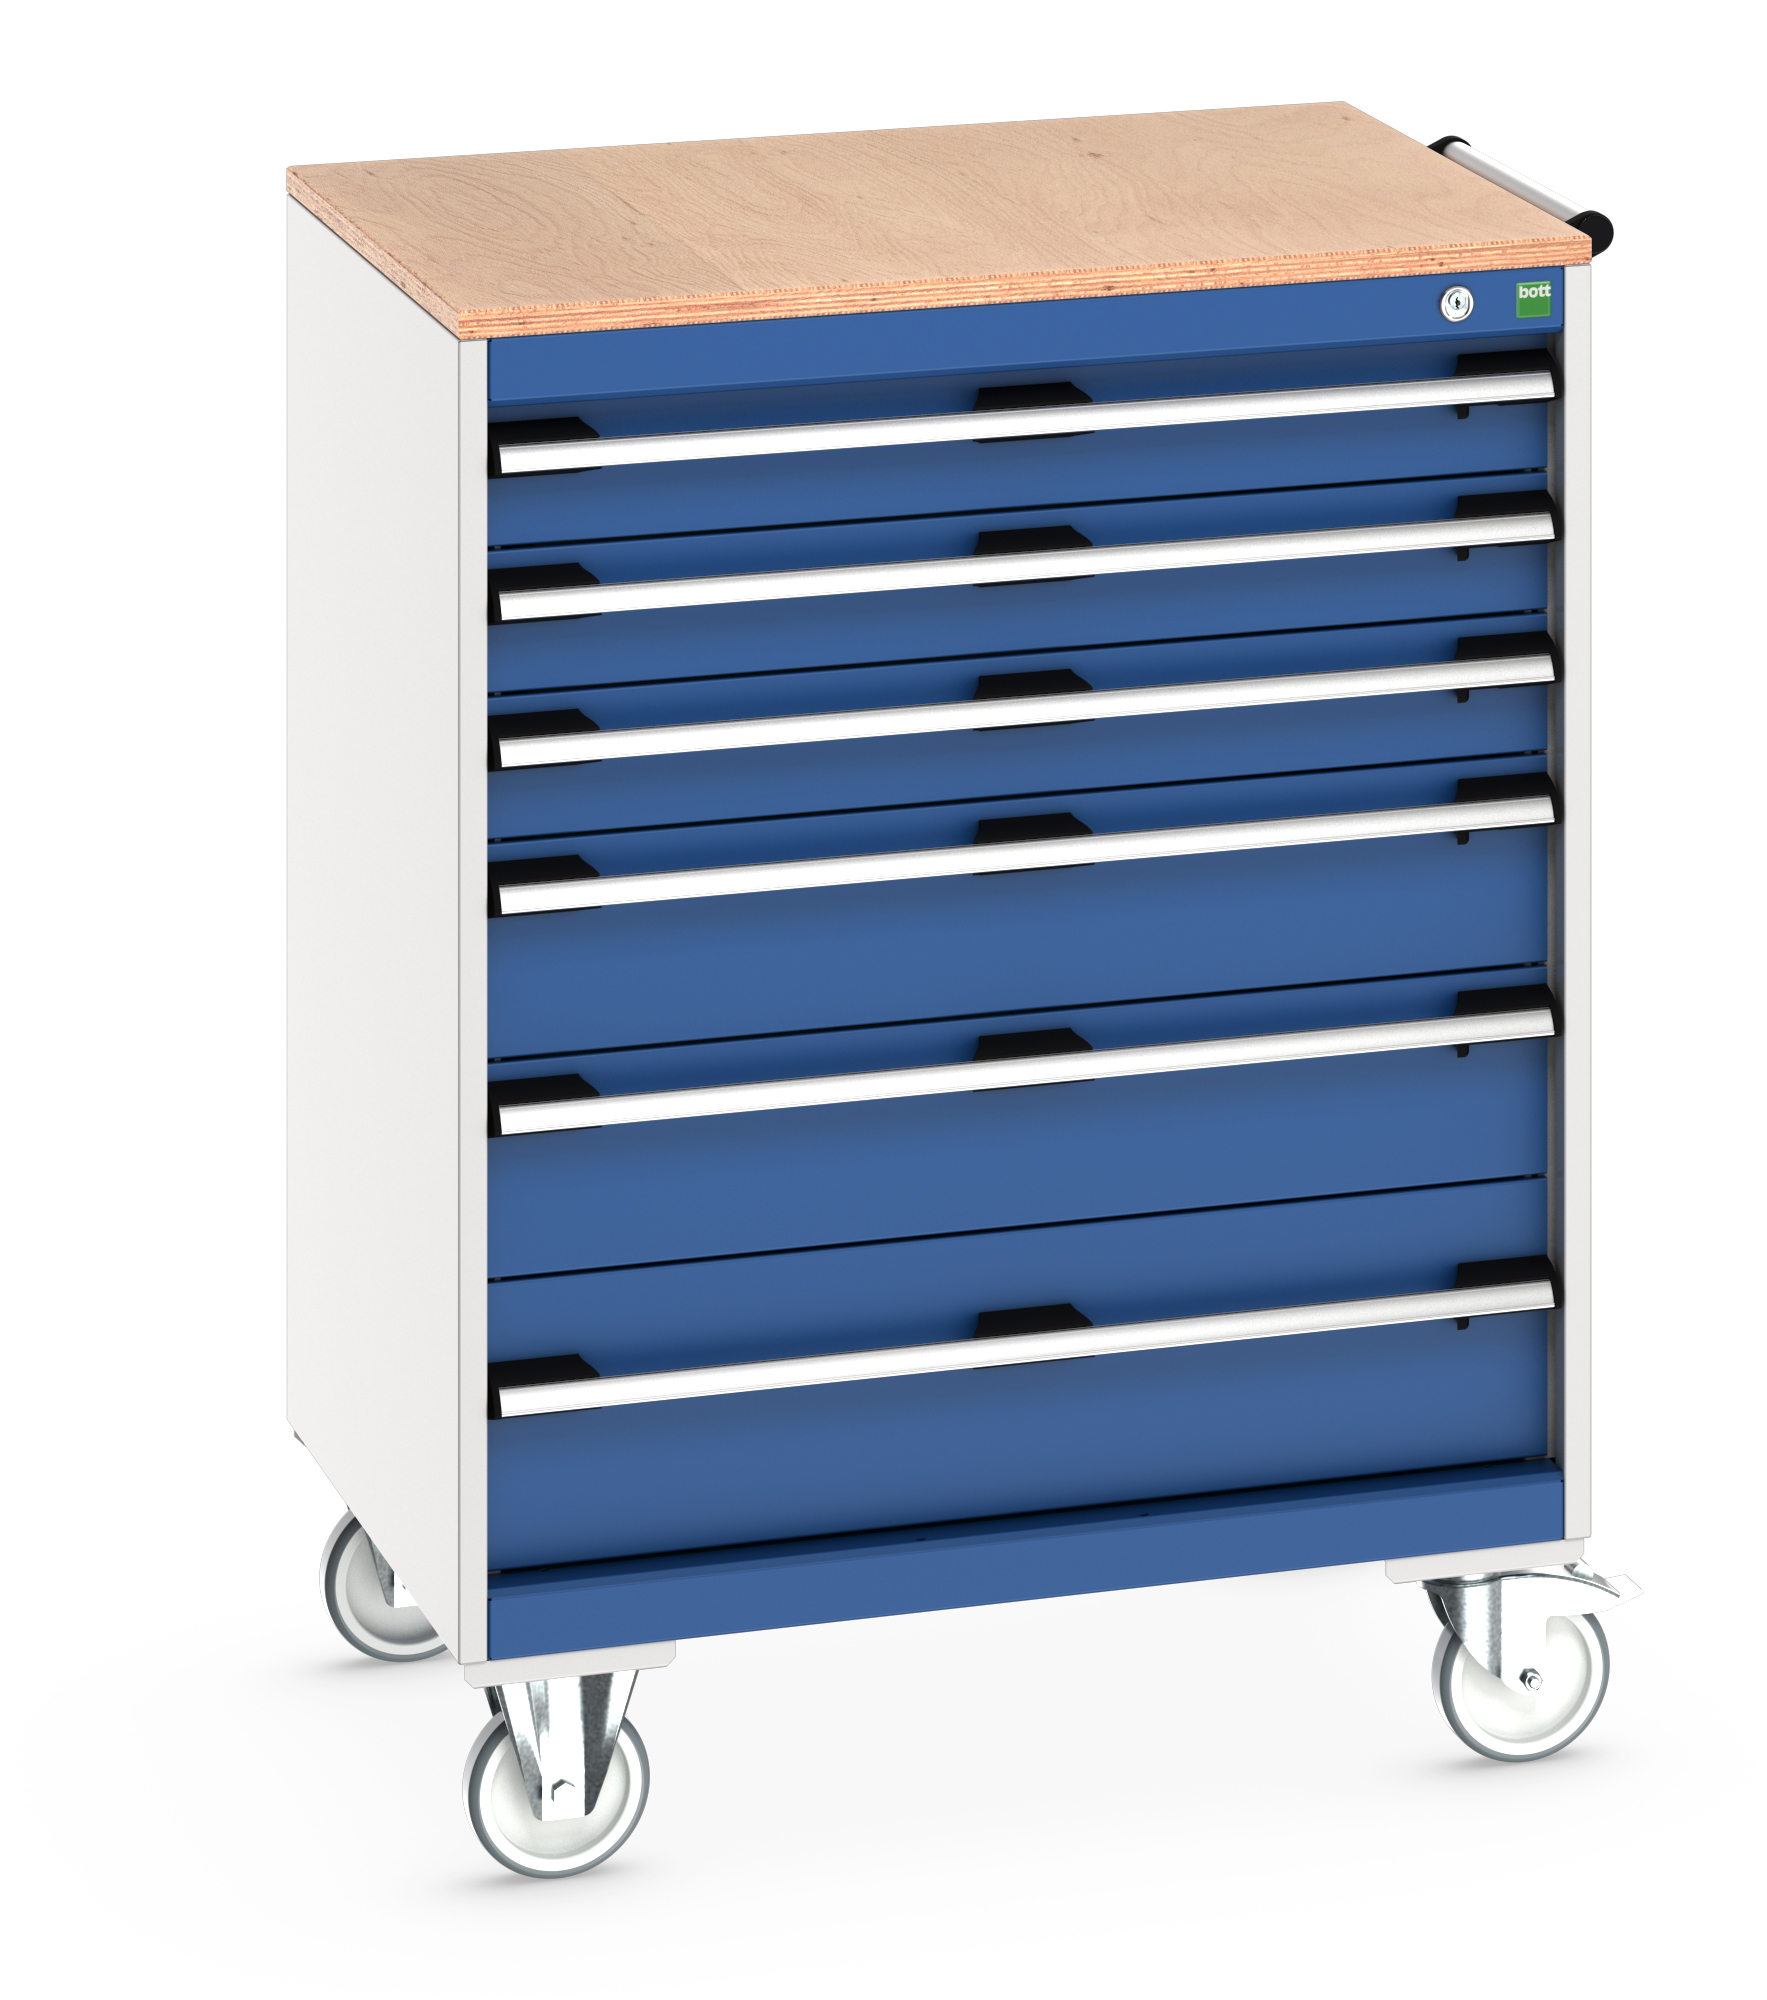 Bott Cubio Mobile Drawer Cabinet With 6 Drawers & Multiplex Worktop - 40402159.11V